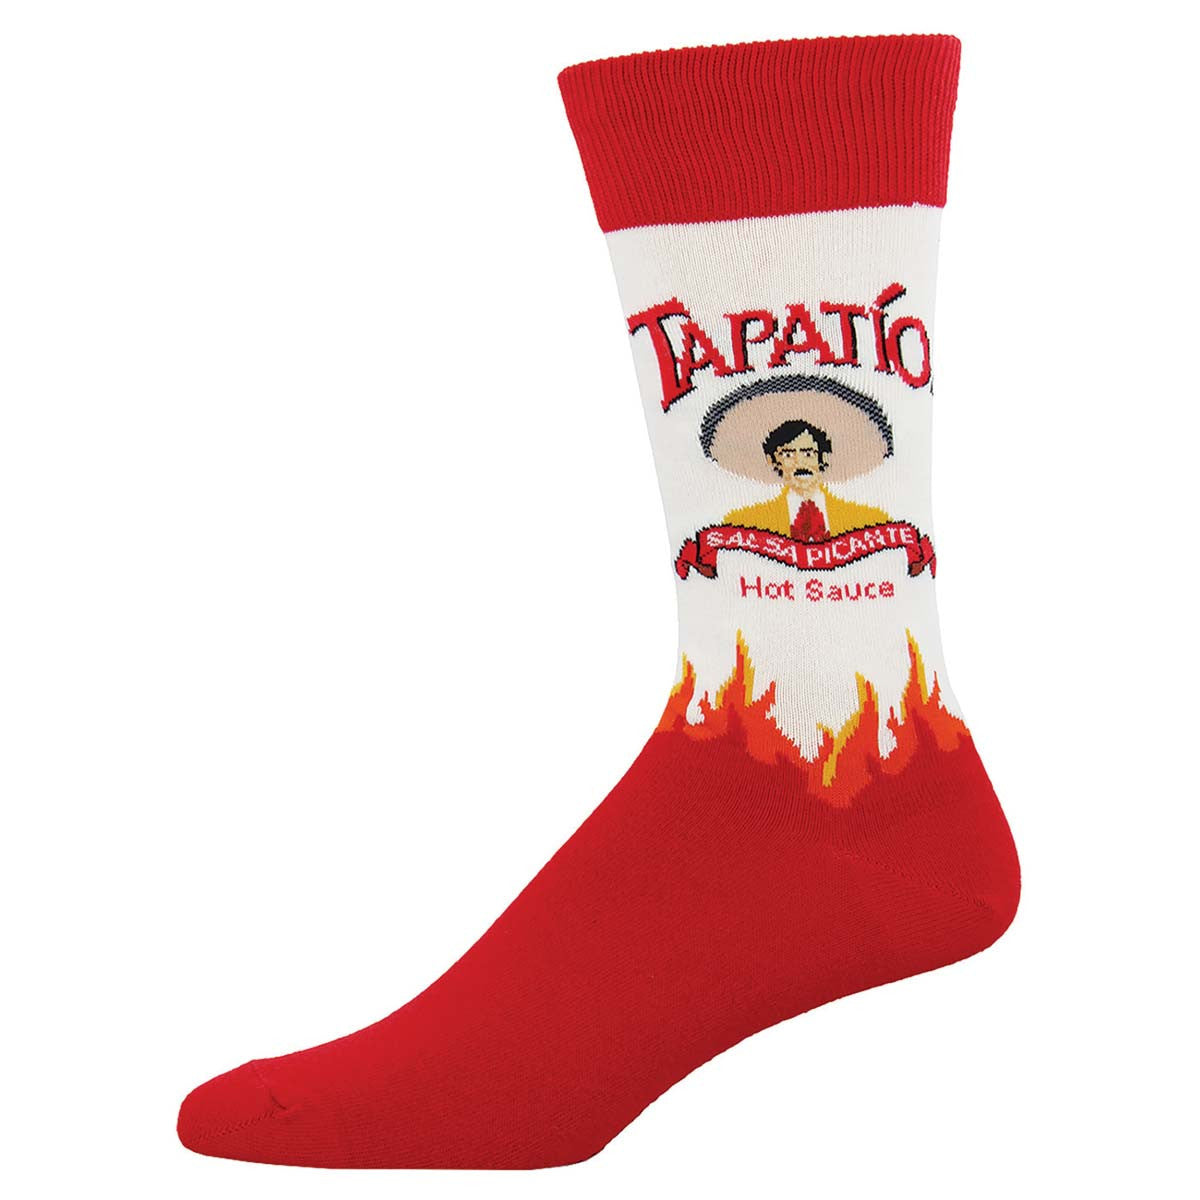 Tapatio Hot Sauce Men's Socks